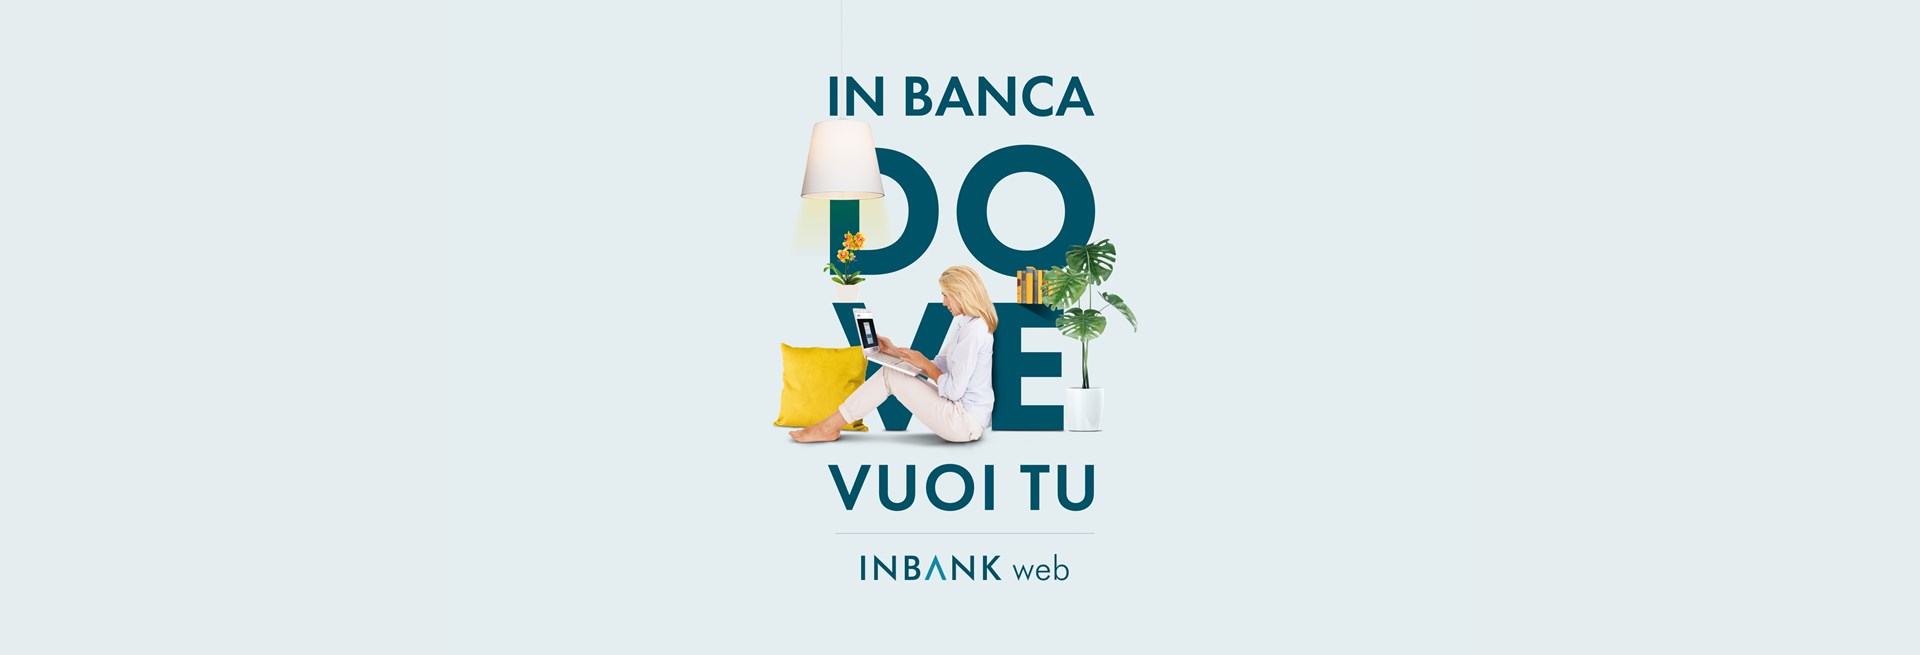 inbank web